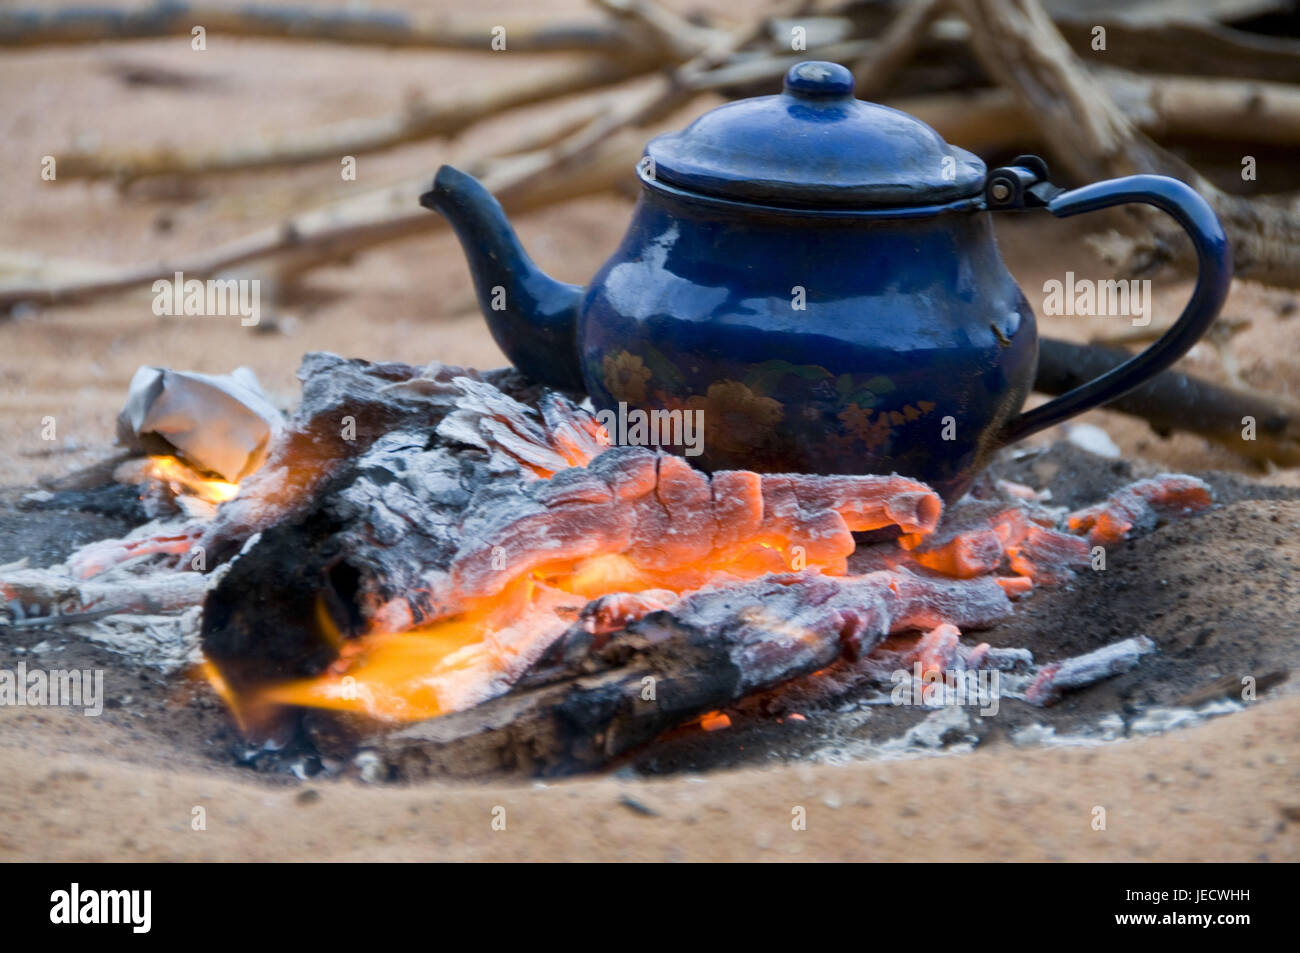 https://c8.alamy.com/comp/JECWHH/pot-of-tea-on-a-fireplace-tadrat-algeria-africa-JECWHH.jpg